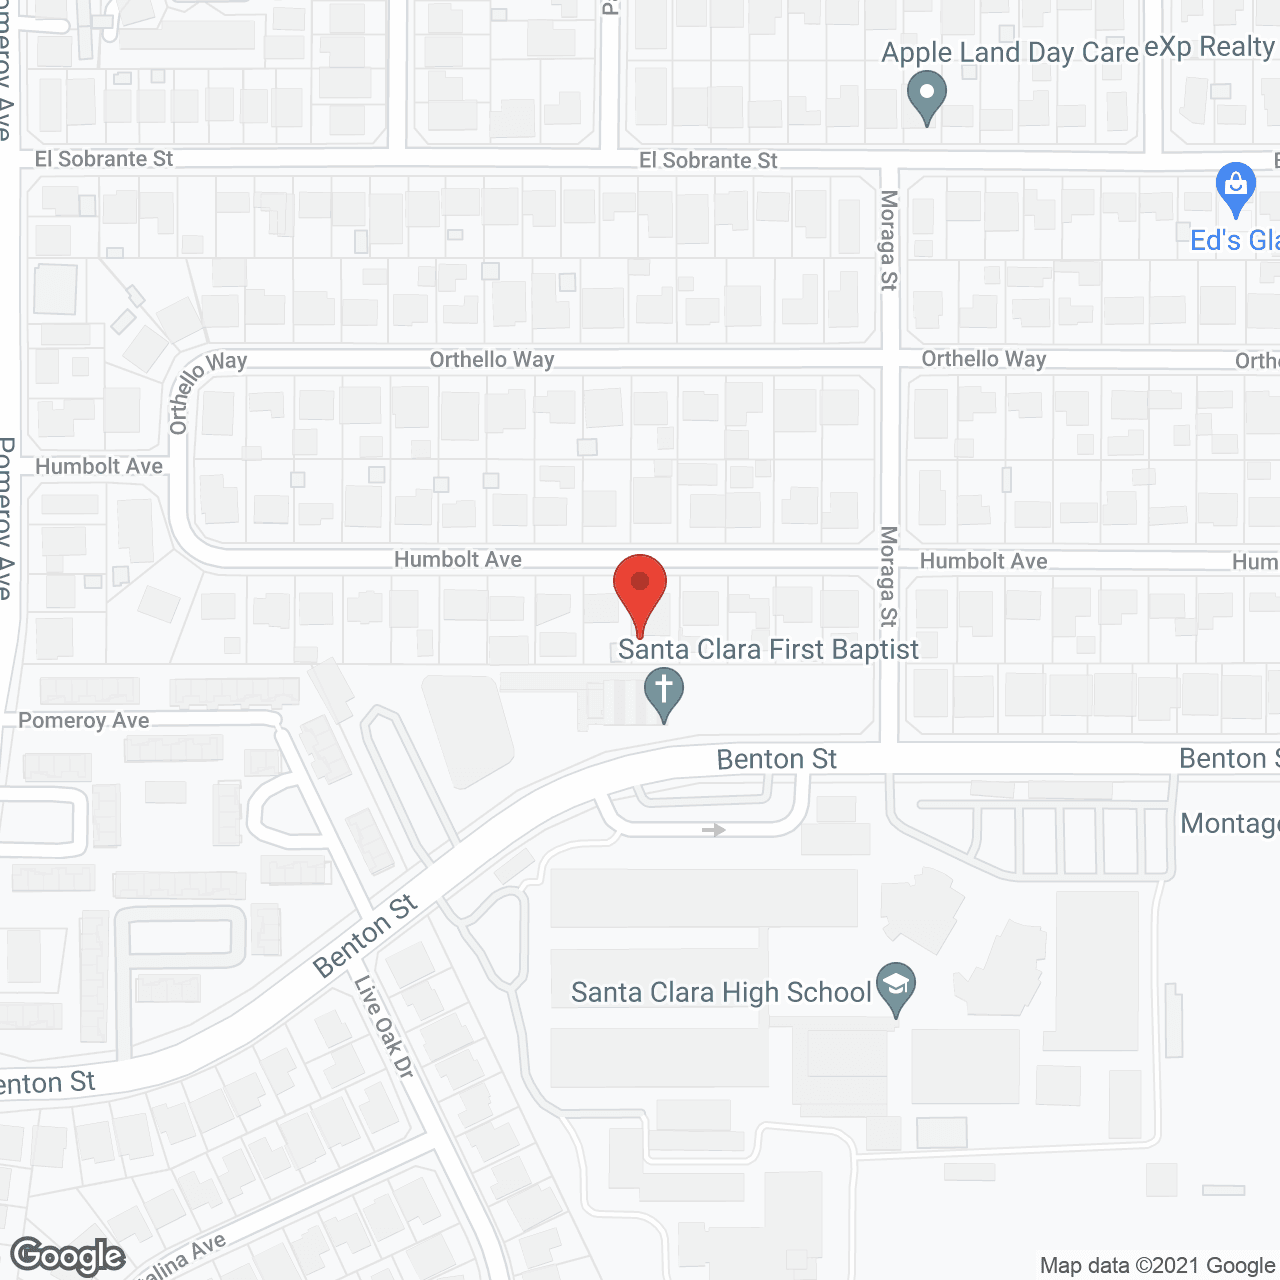 123 Home Care Services Bay Area l LLC - Santa Clara, CA in google map